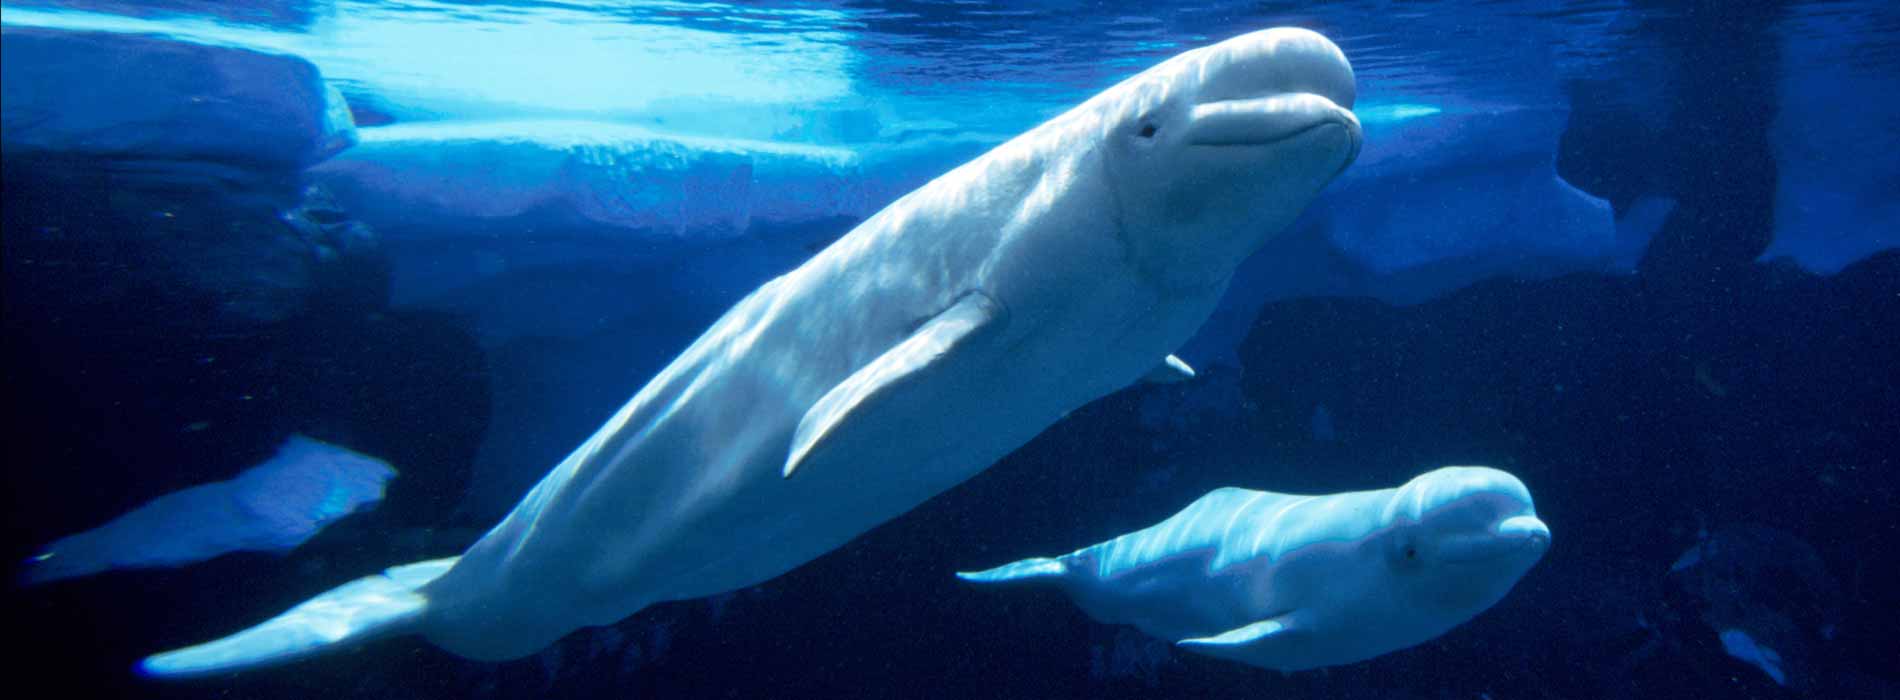 Two beluga whales swimming underwater